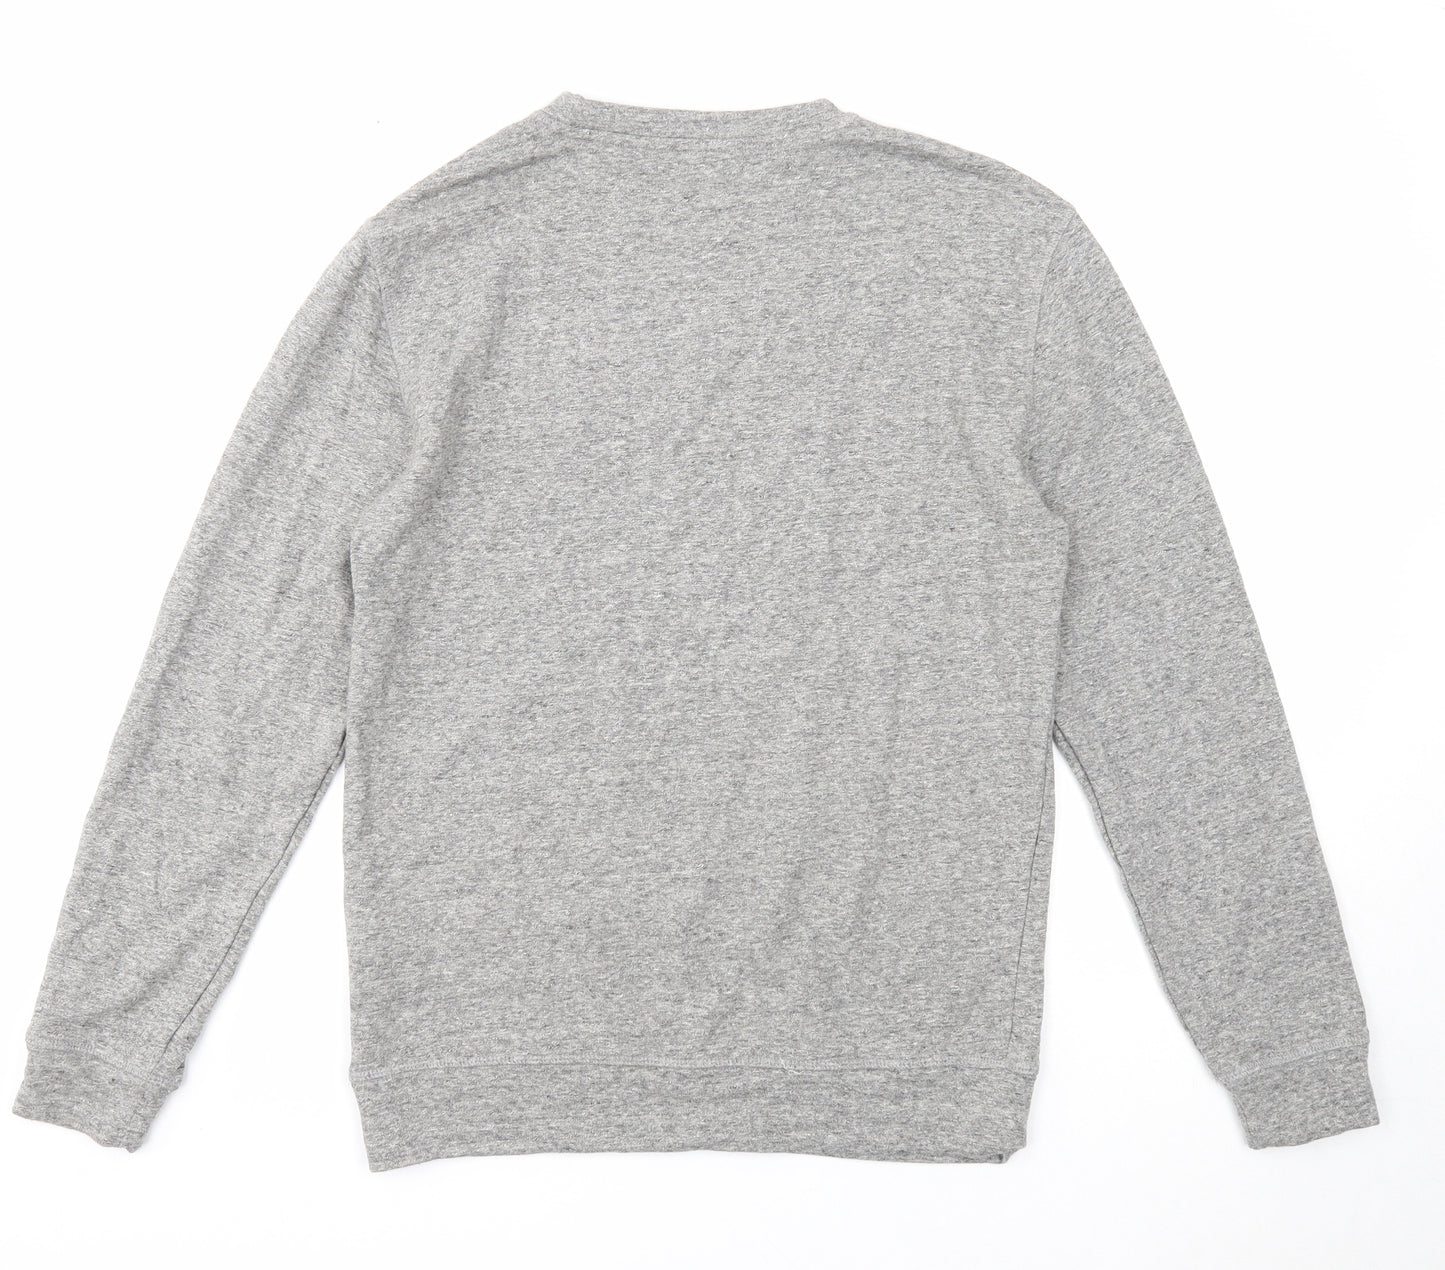 NEXT Mens Grey Cotton Pullover Sweatshirt Size S